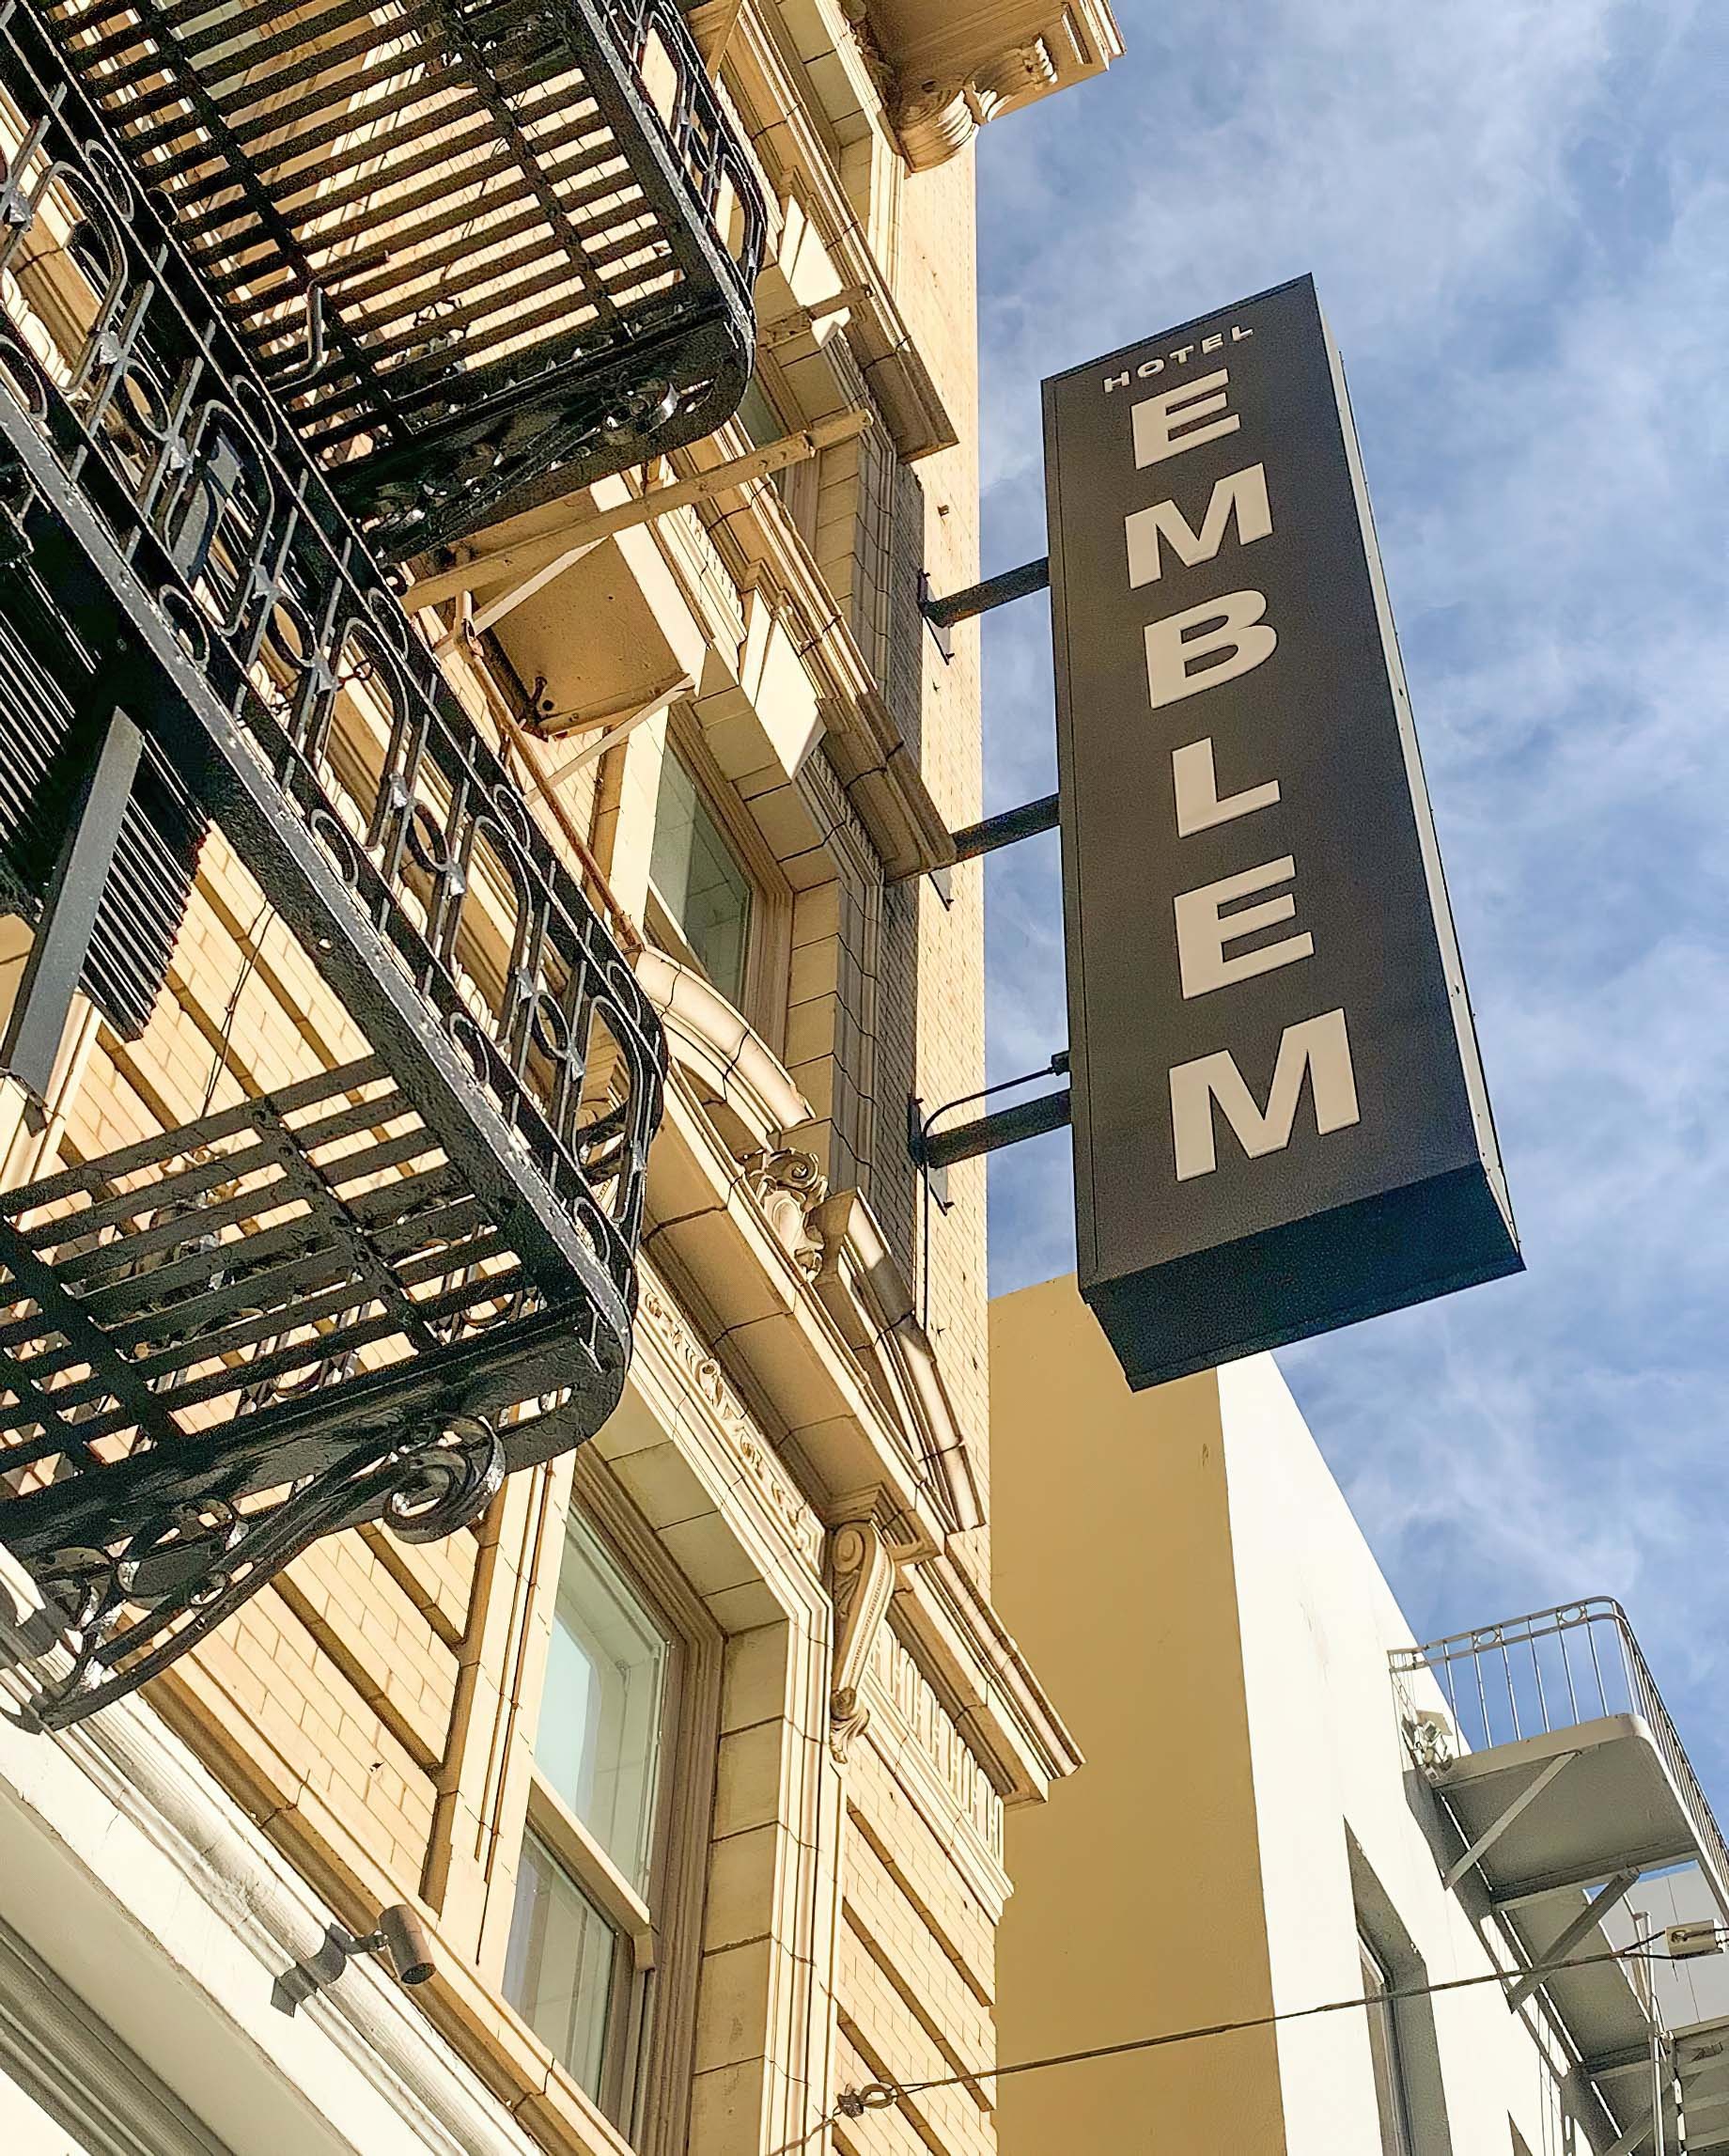 Hotel Emblem, a Viceroy Urban Retreat – San Francisco, CA, USA – Exterior Sign